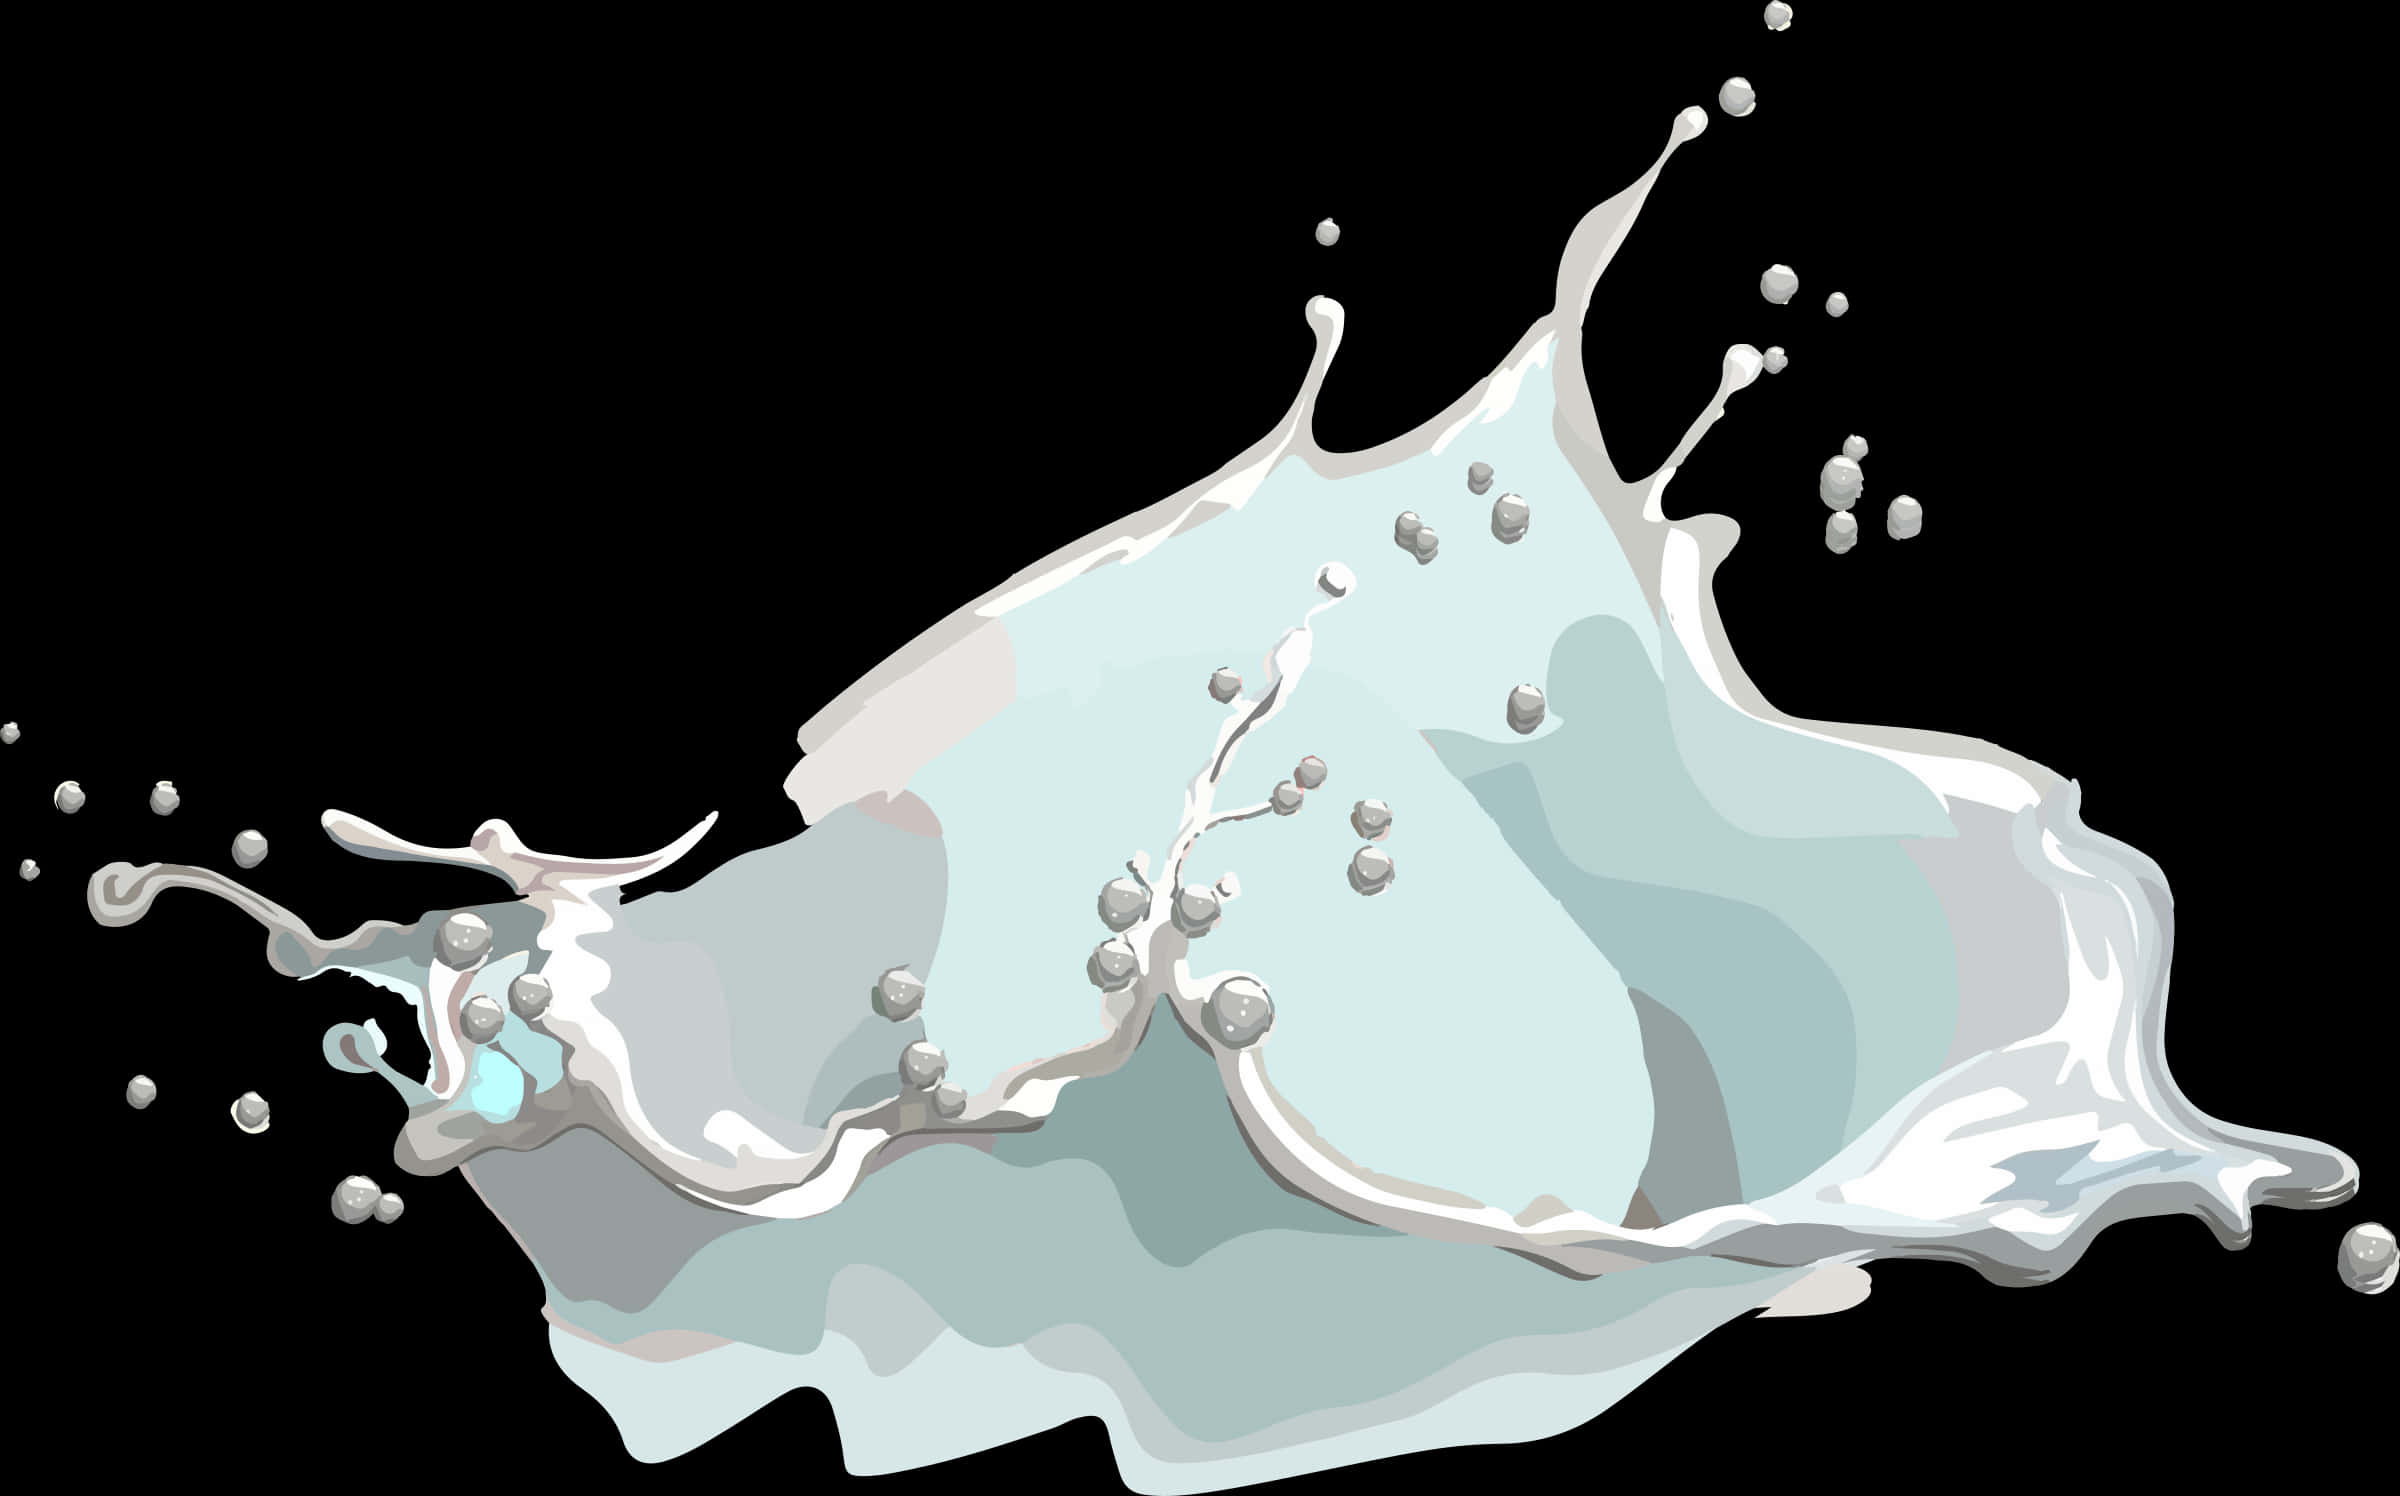 Dynamic Water Splash Illustration